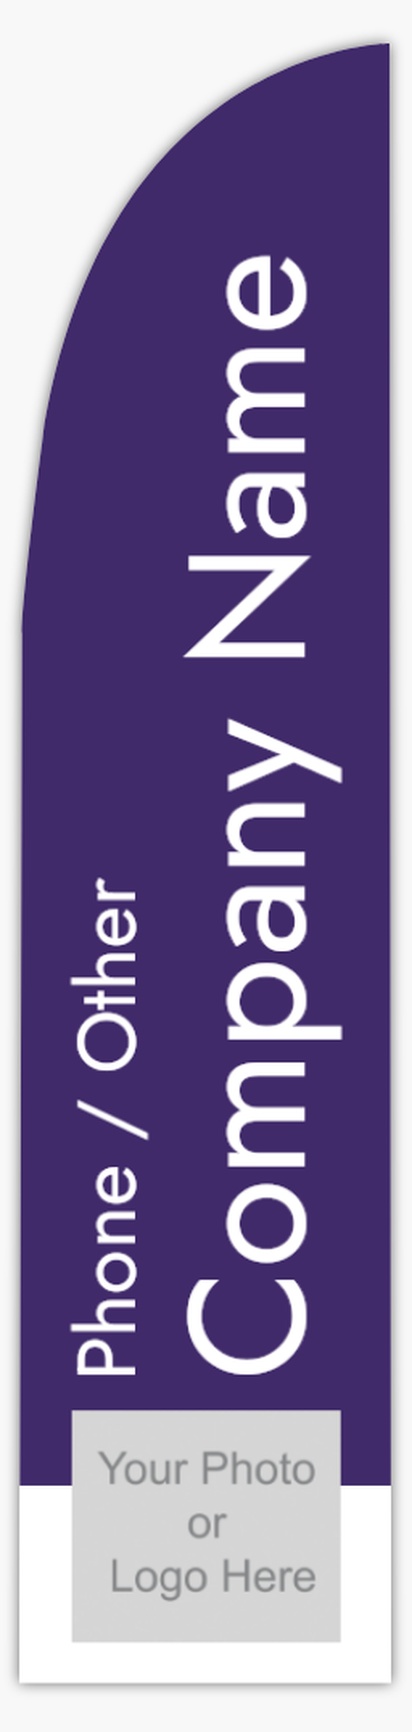 A photo czysty purple white design with 1 uploads